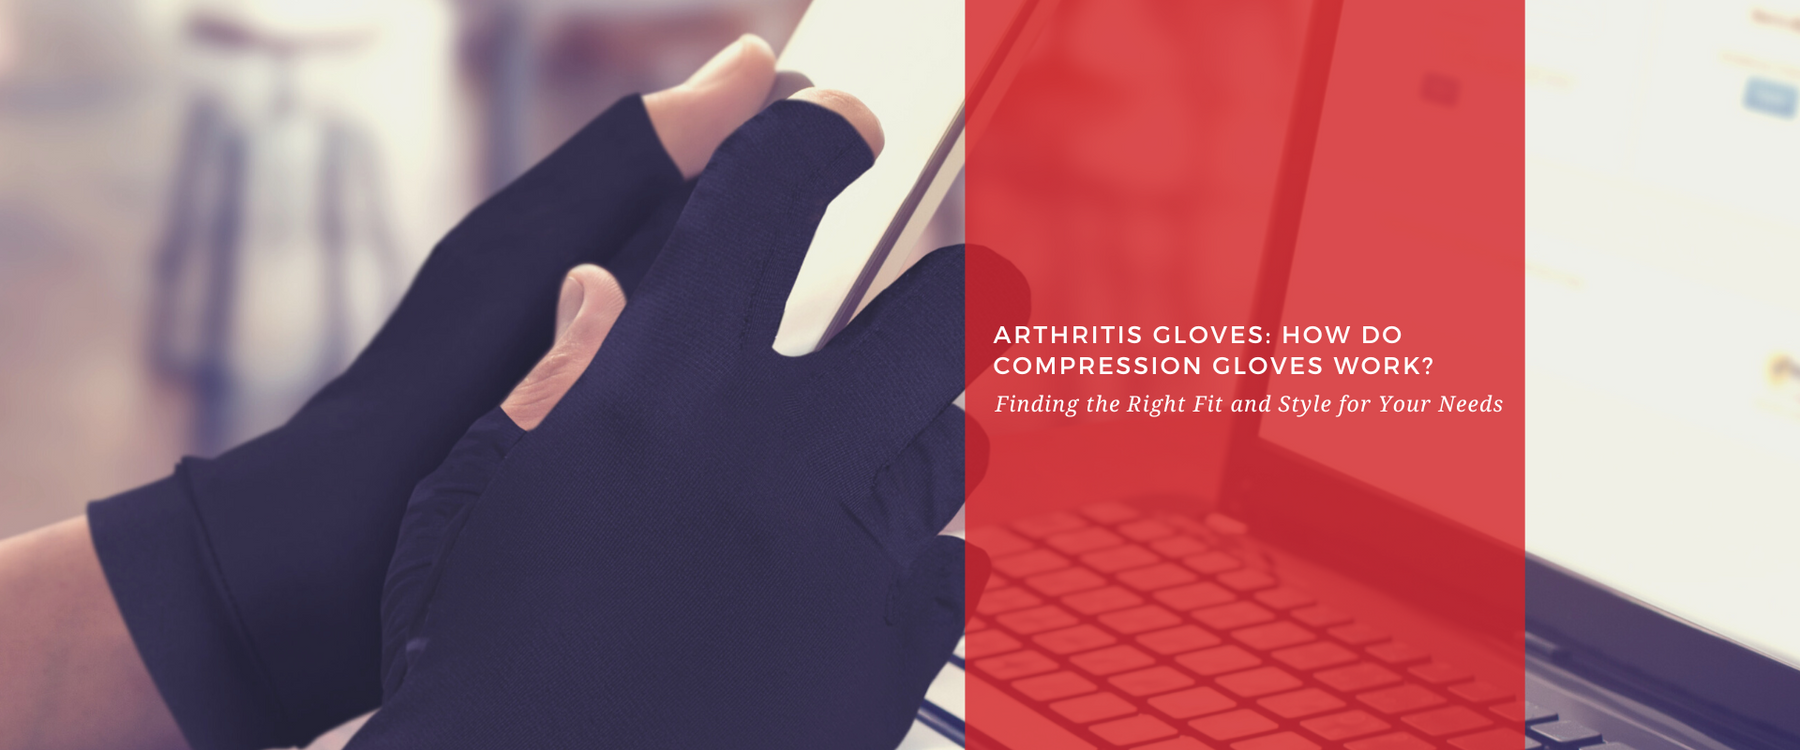 How Do Compression Gloves for Arthritis Work?